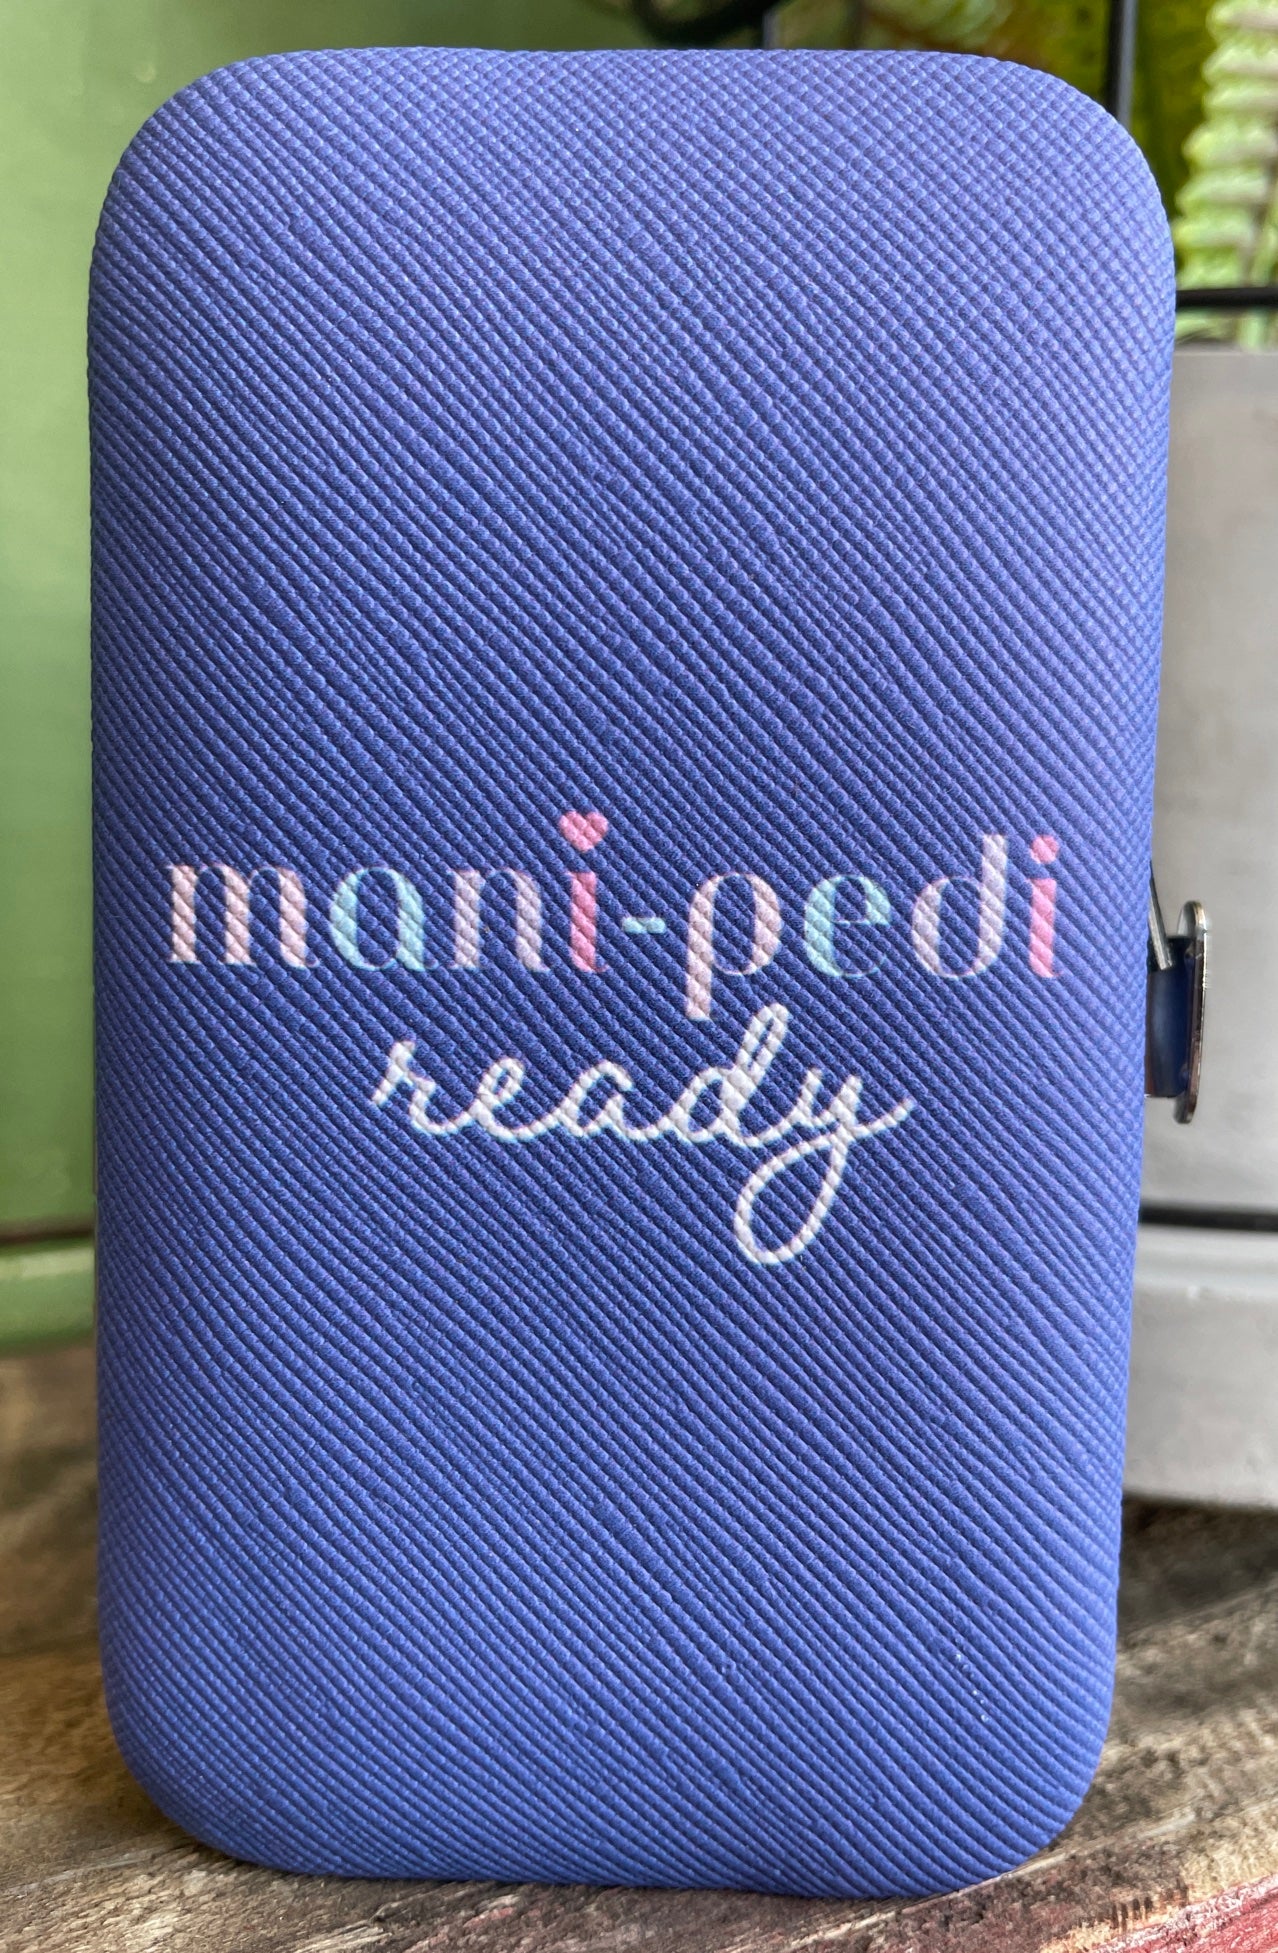 "mani-pedi ready" 6 piece manicure kit